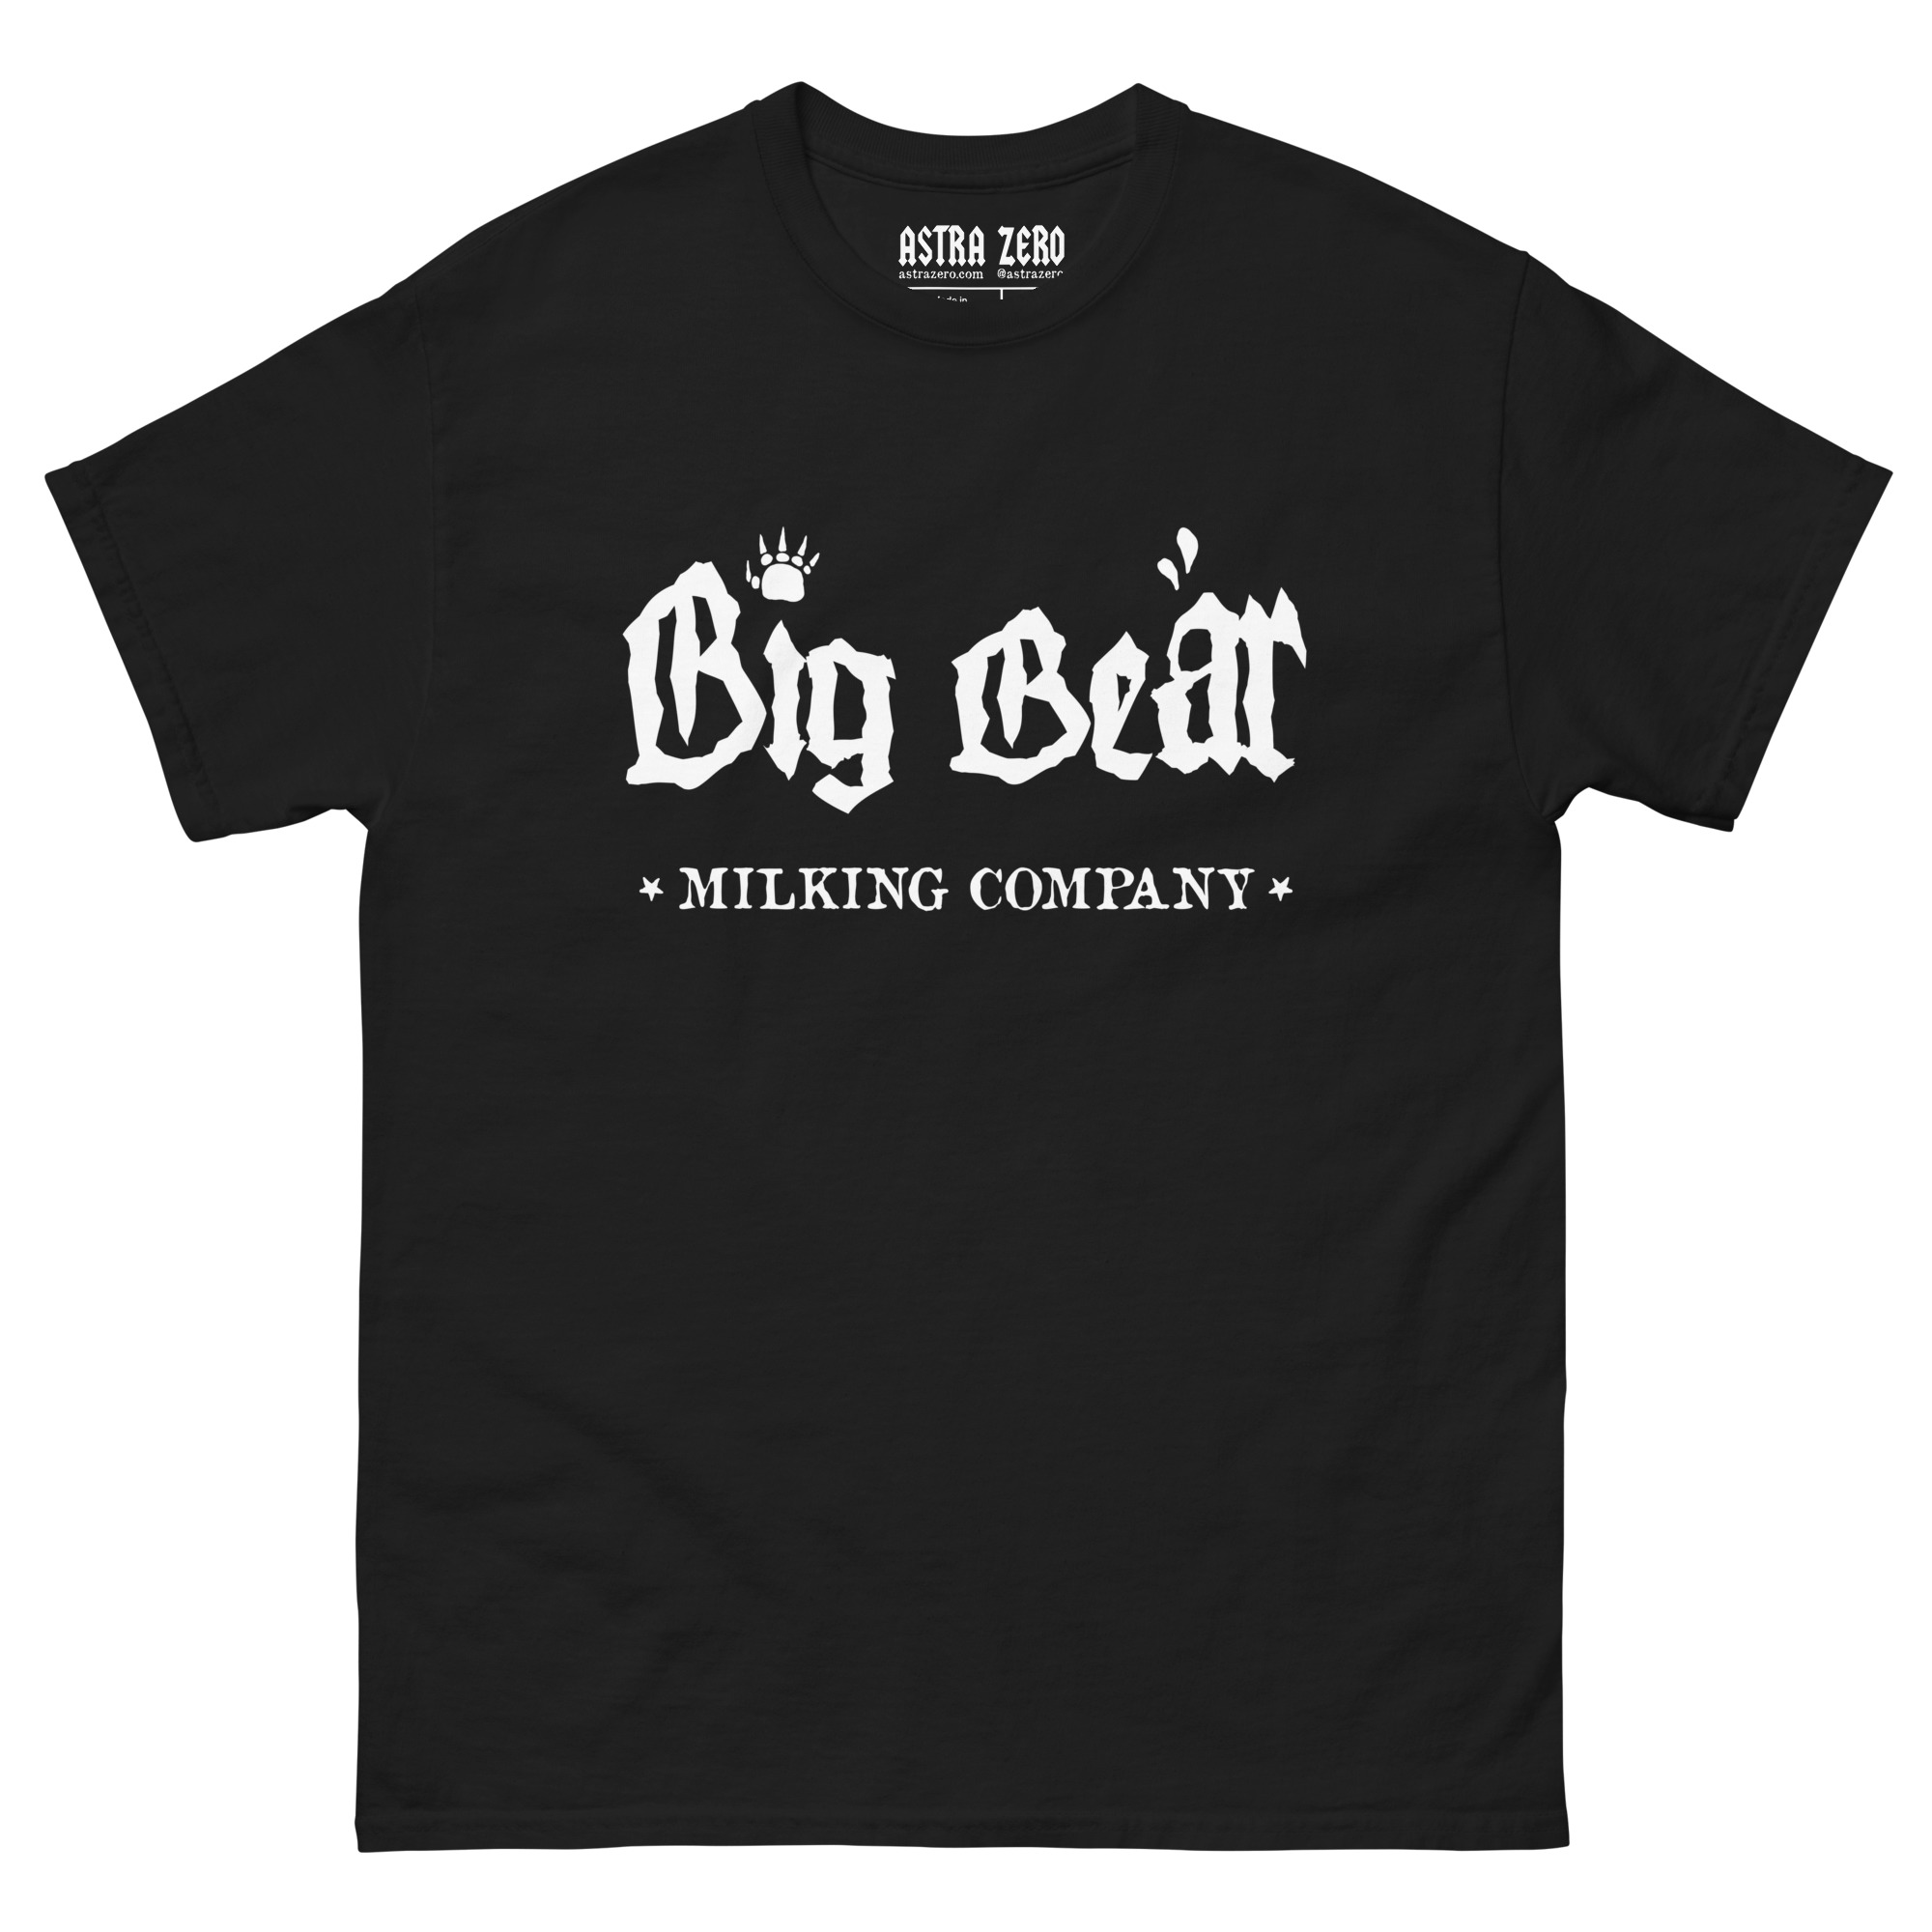 Featured image for “Big Bear Milking Co. - Men's classic Gildan tee”